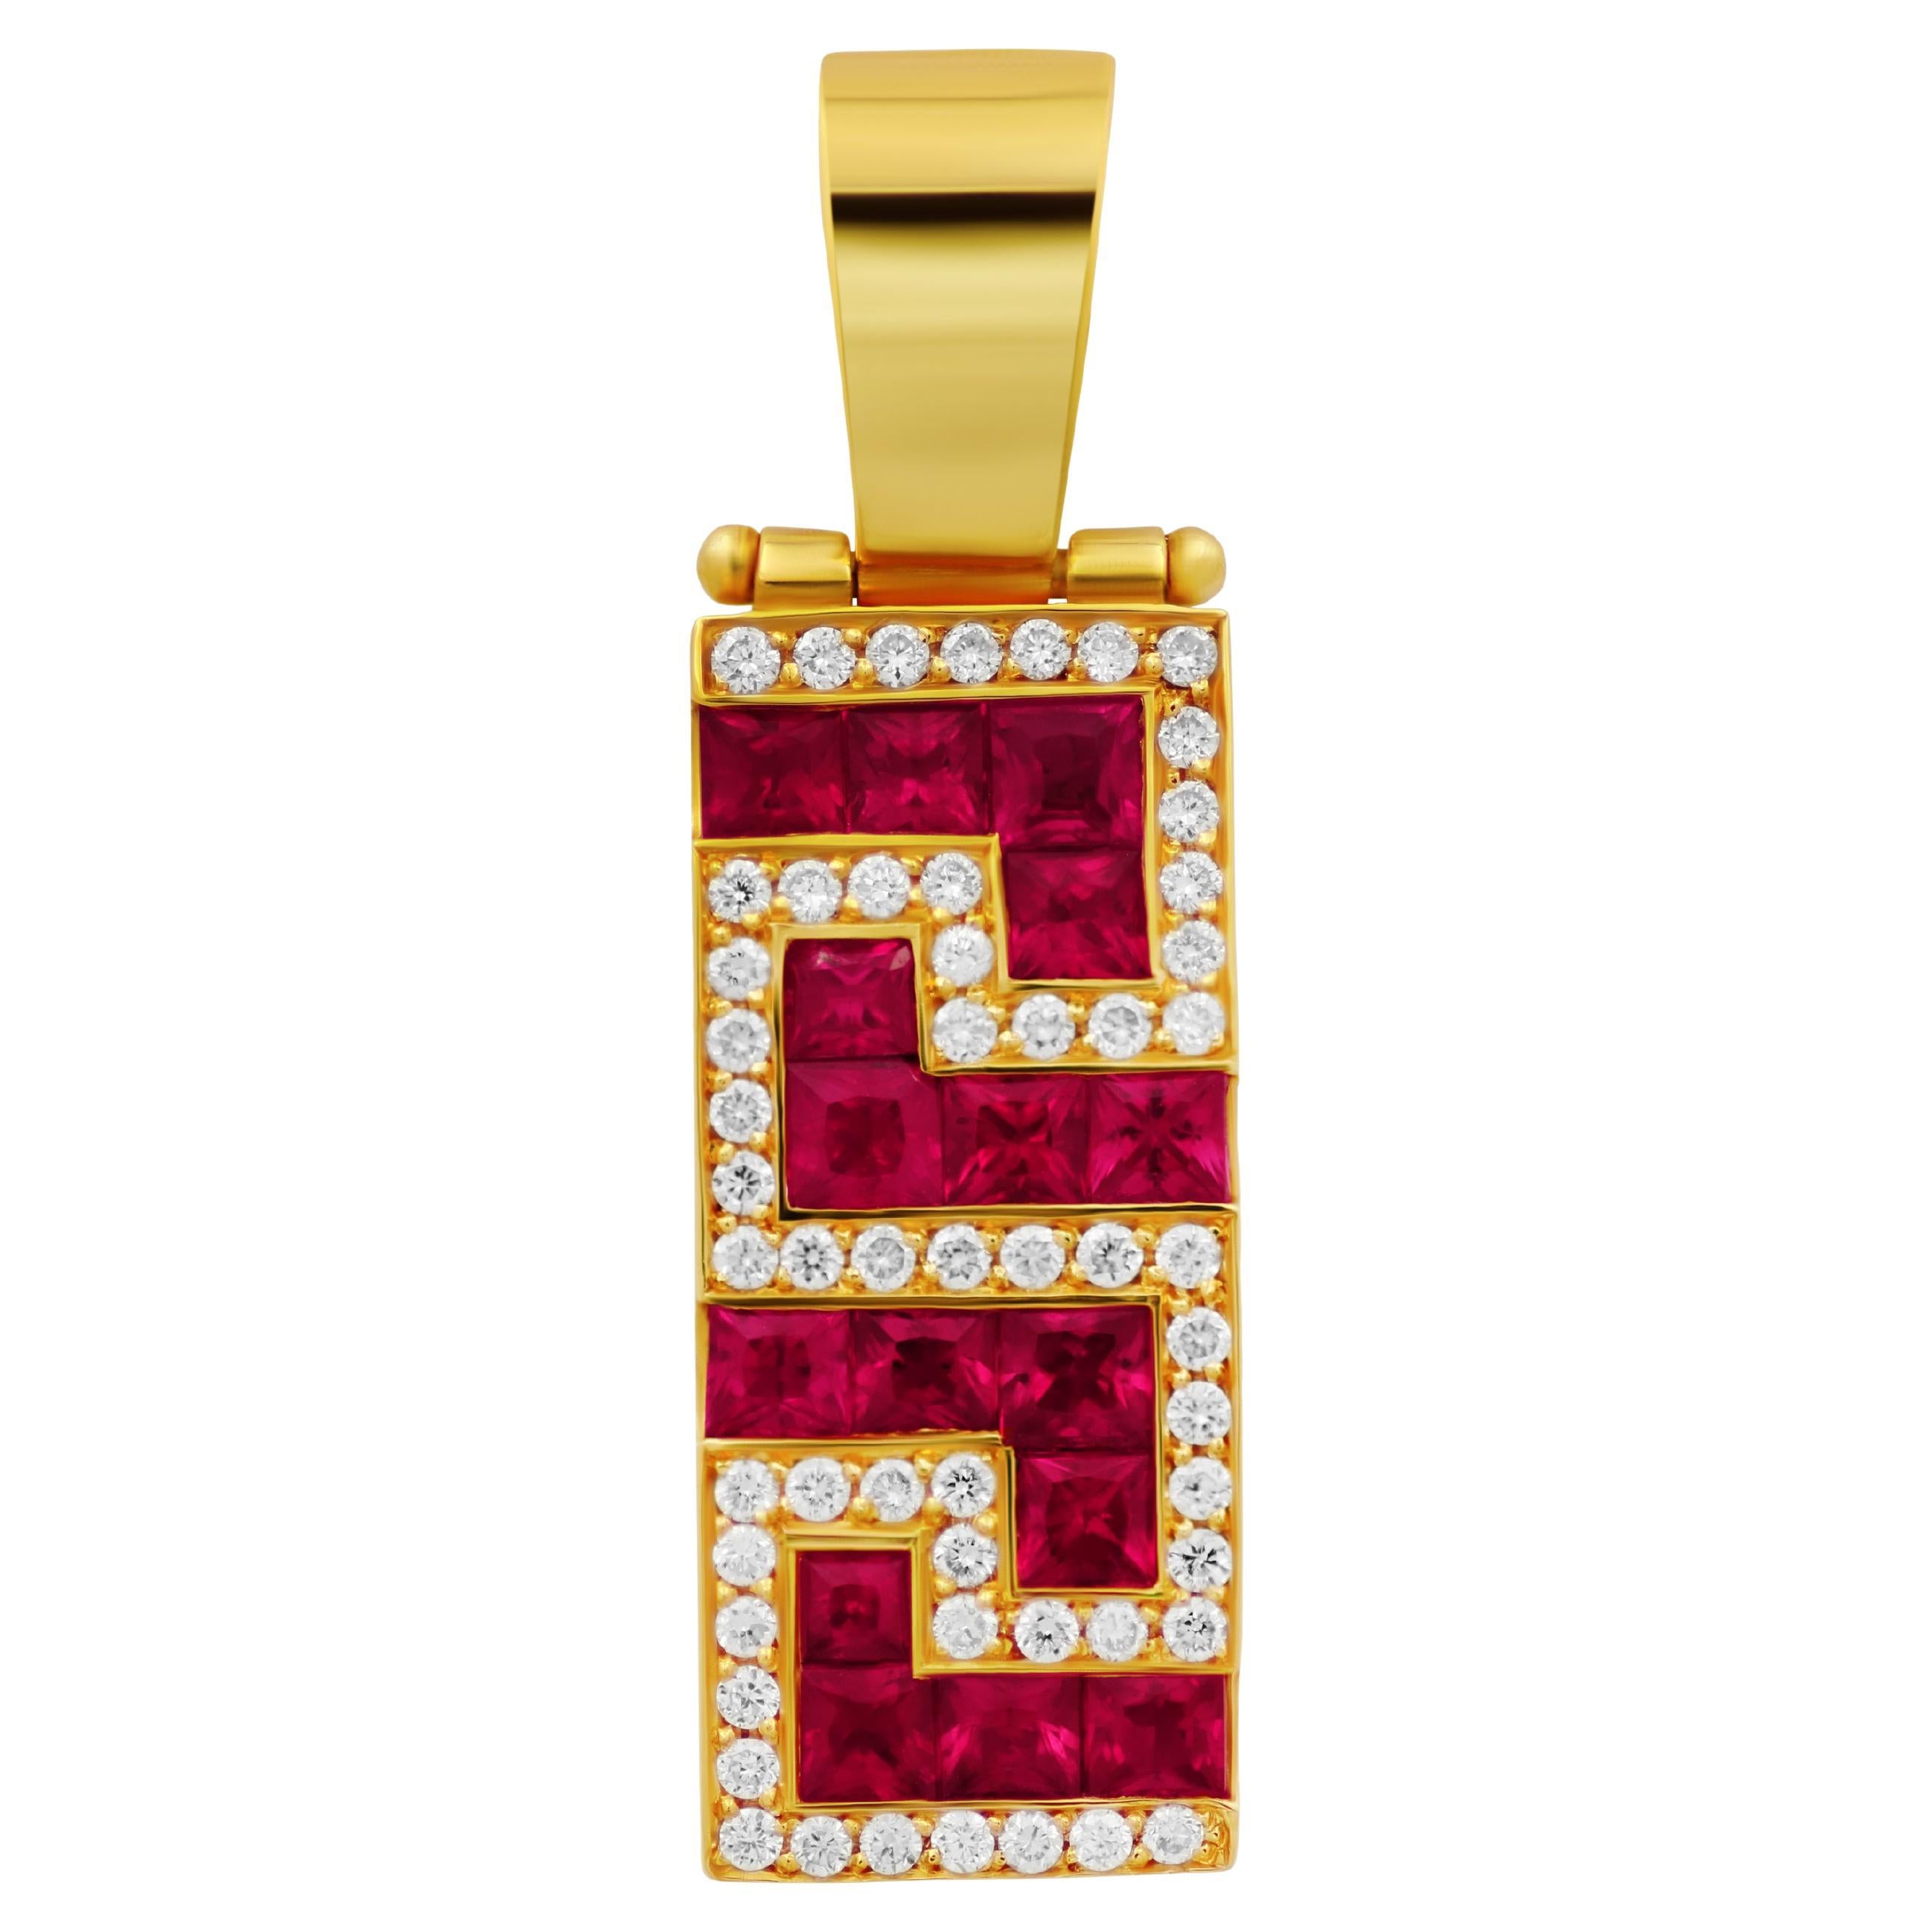 Dimos 18k Gold Greek Key Cocktail Rubies and Diamonds Pendant